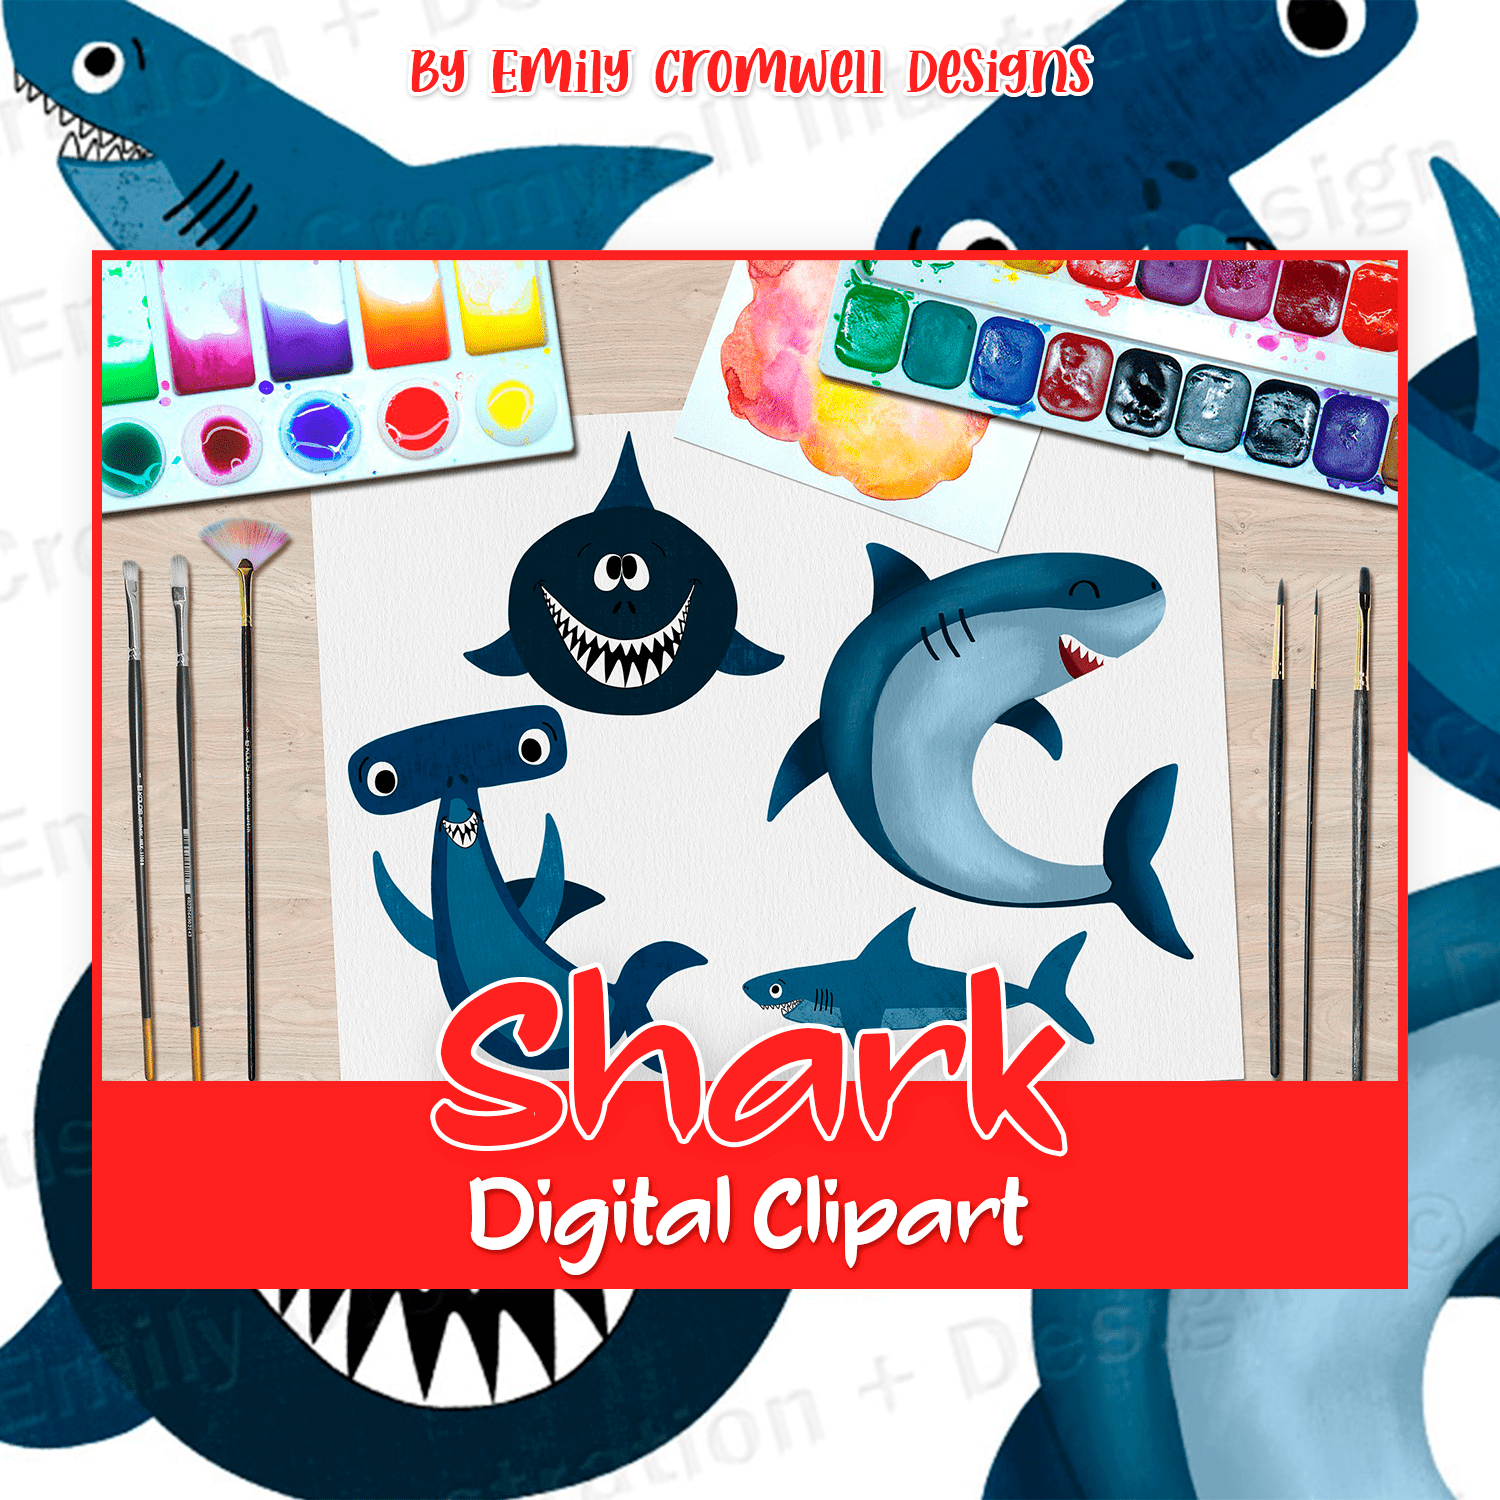 Shark Digital Clipart cover.